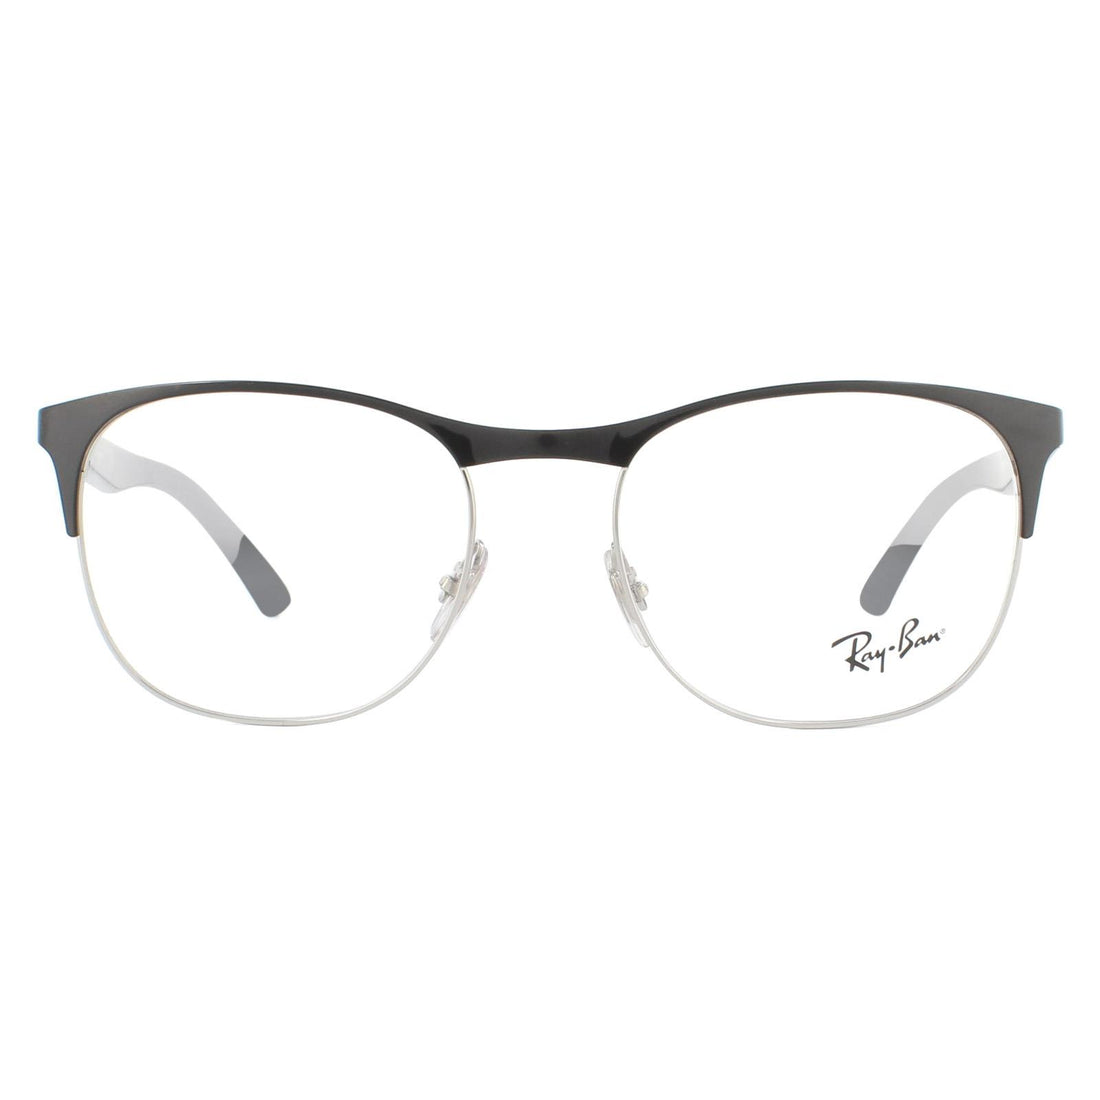 Ray-Ban 6412 Glasses Frames Black Silver 52